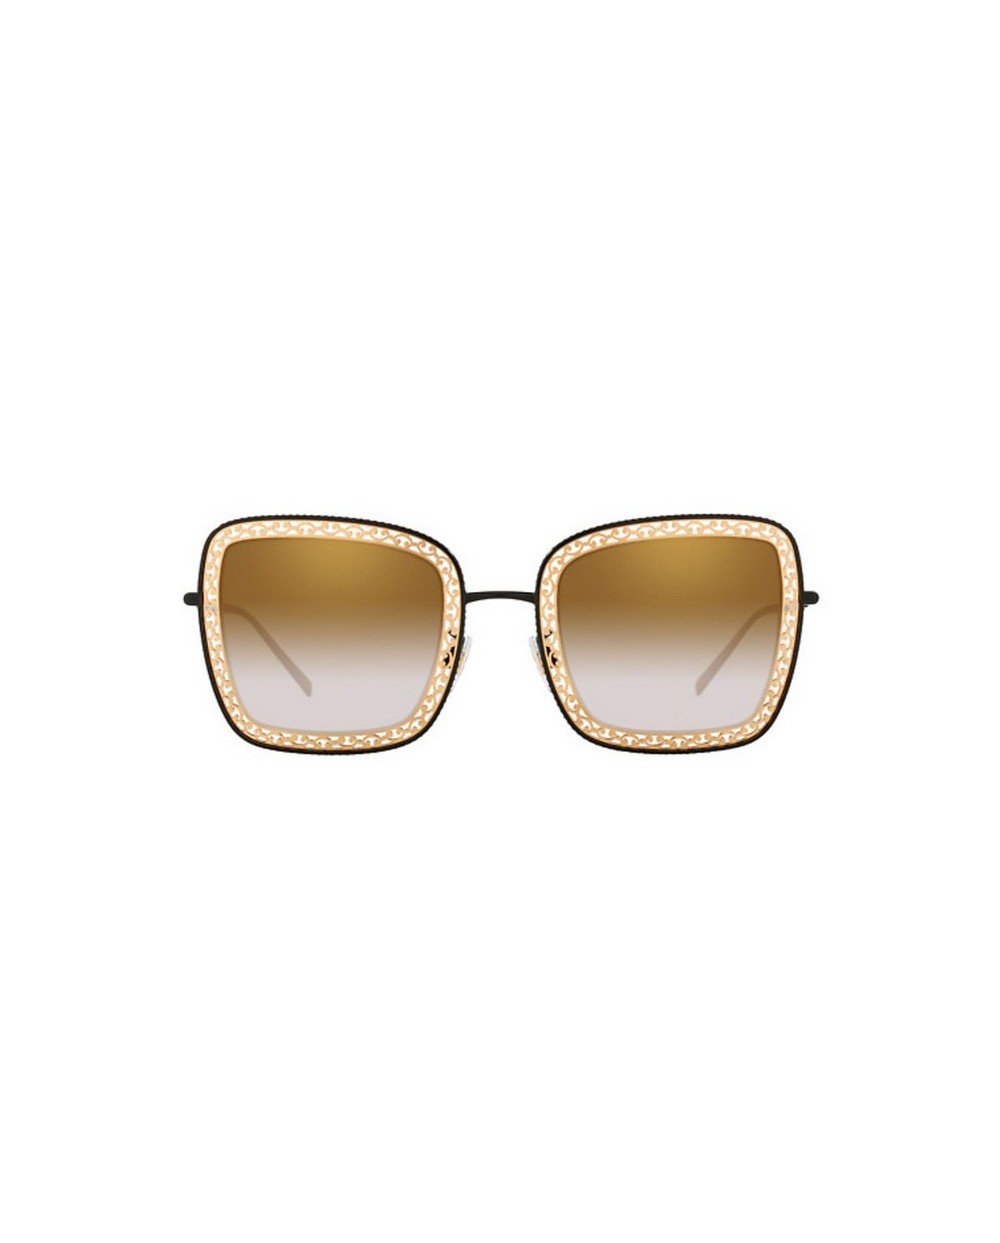 Glasses sun Dolce&Gabbana DG 4338 original warranty | OPTICAL PADULA